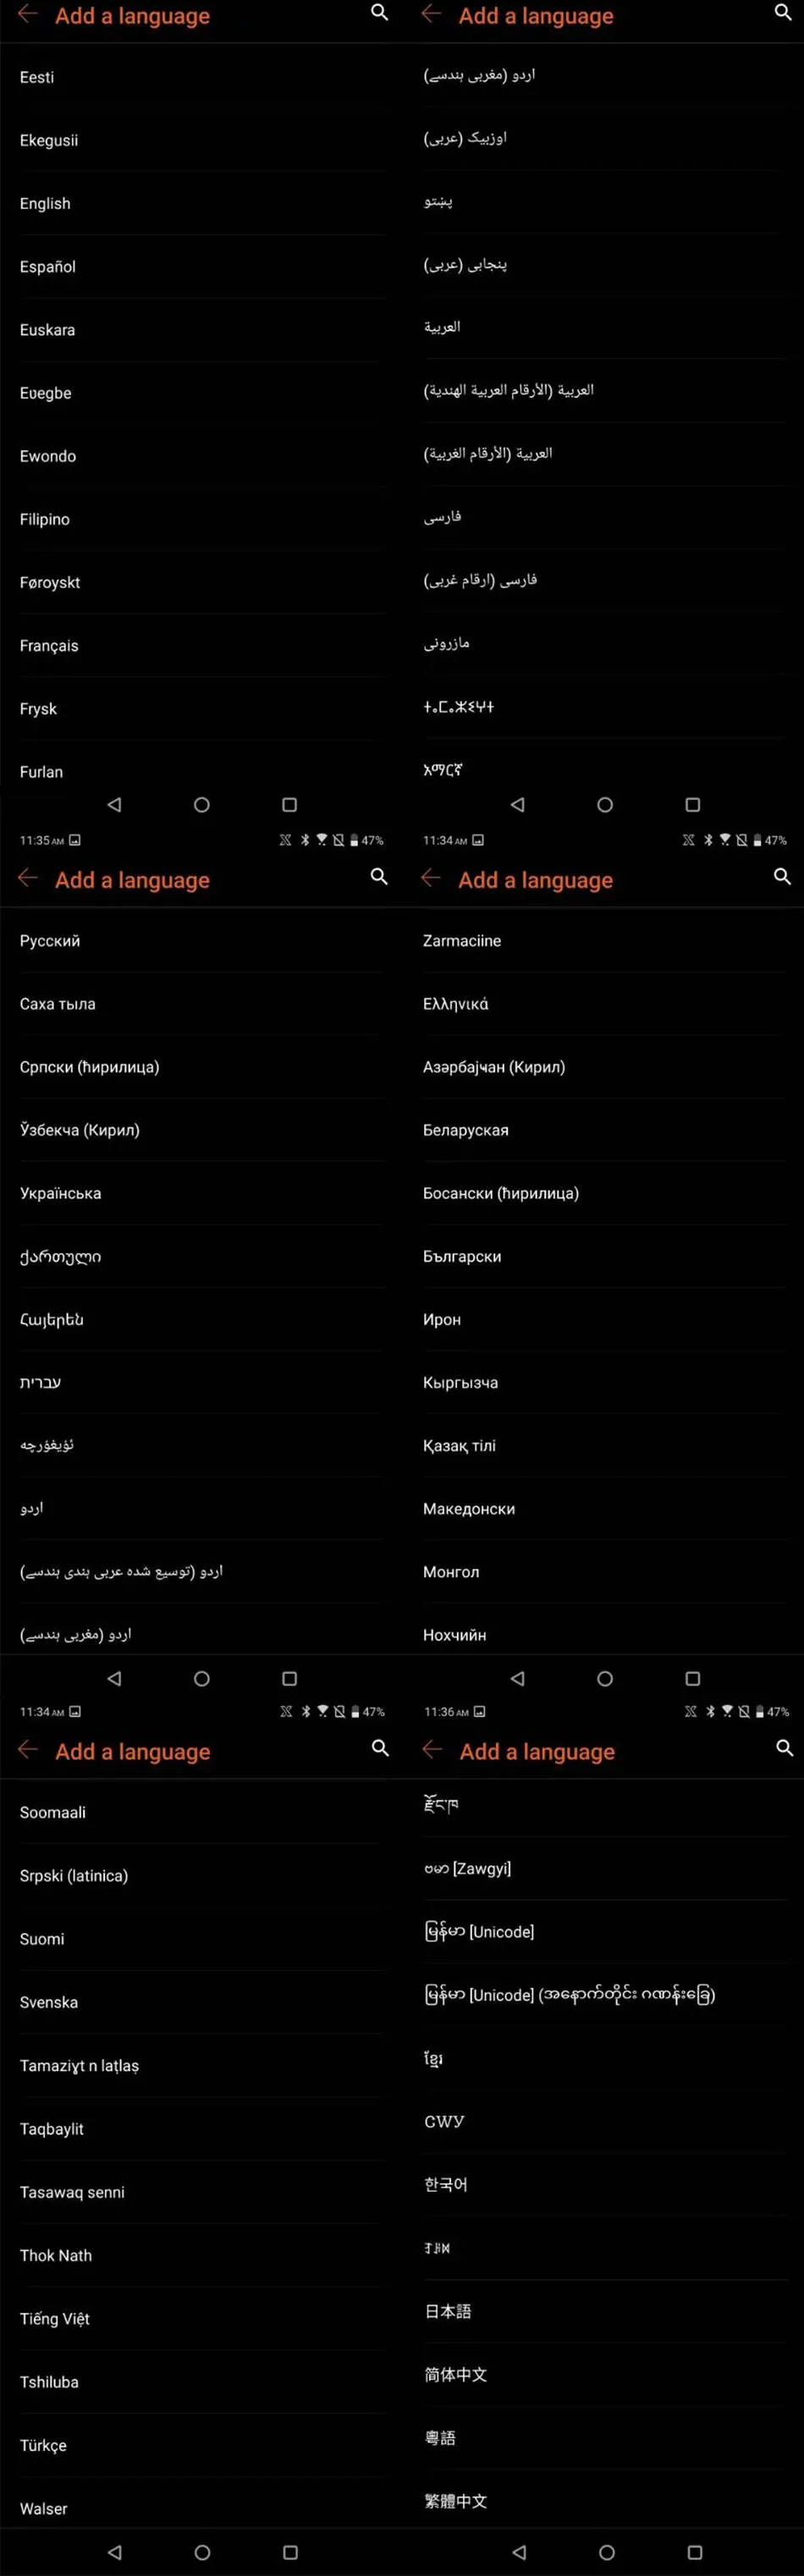 Asus ROG Phone II ZS660KL мобильный телефон с двумя sim-картами 8GB 128GB Snapdragon855+ 6,5" 1080x2340 6000mAh 48MP NFC Android 9,0 ROG Phone 2